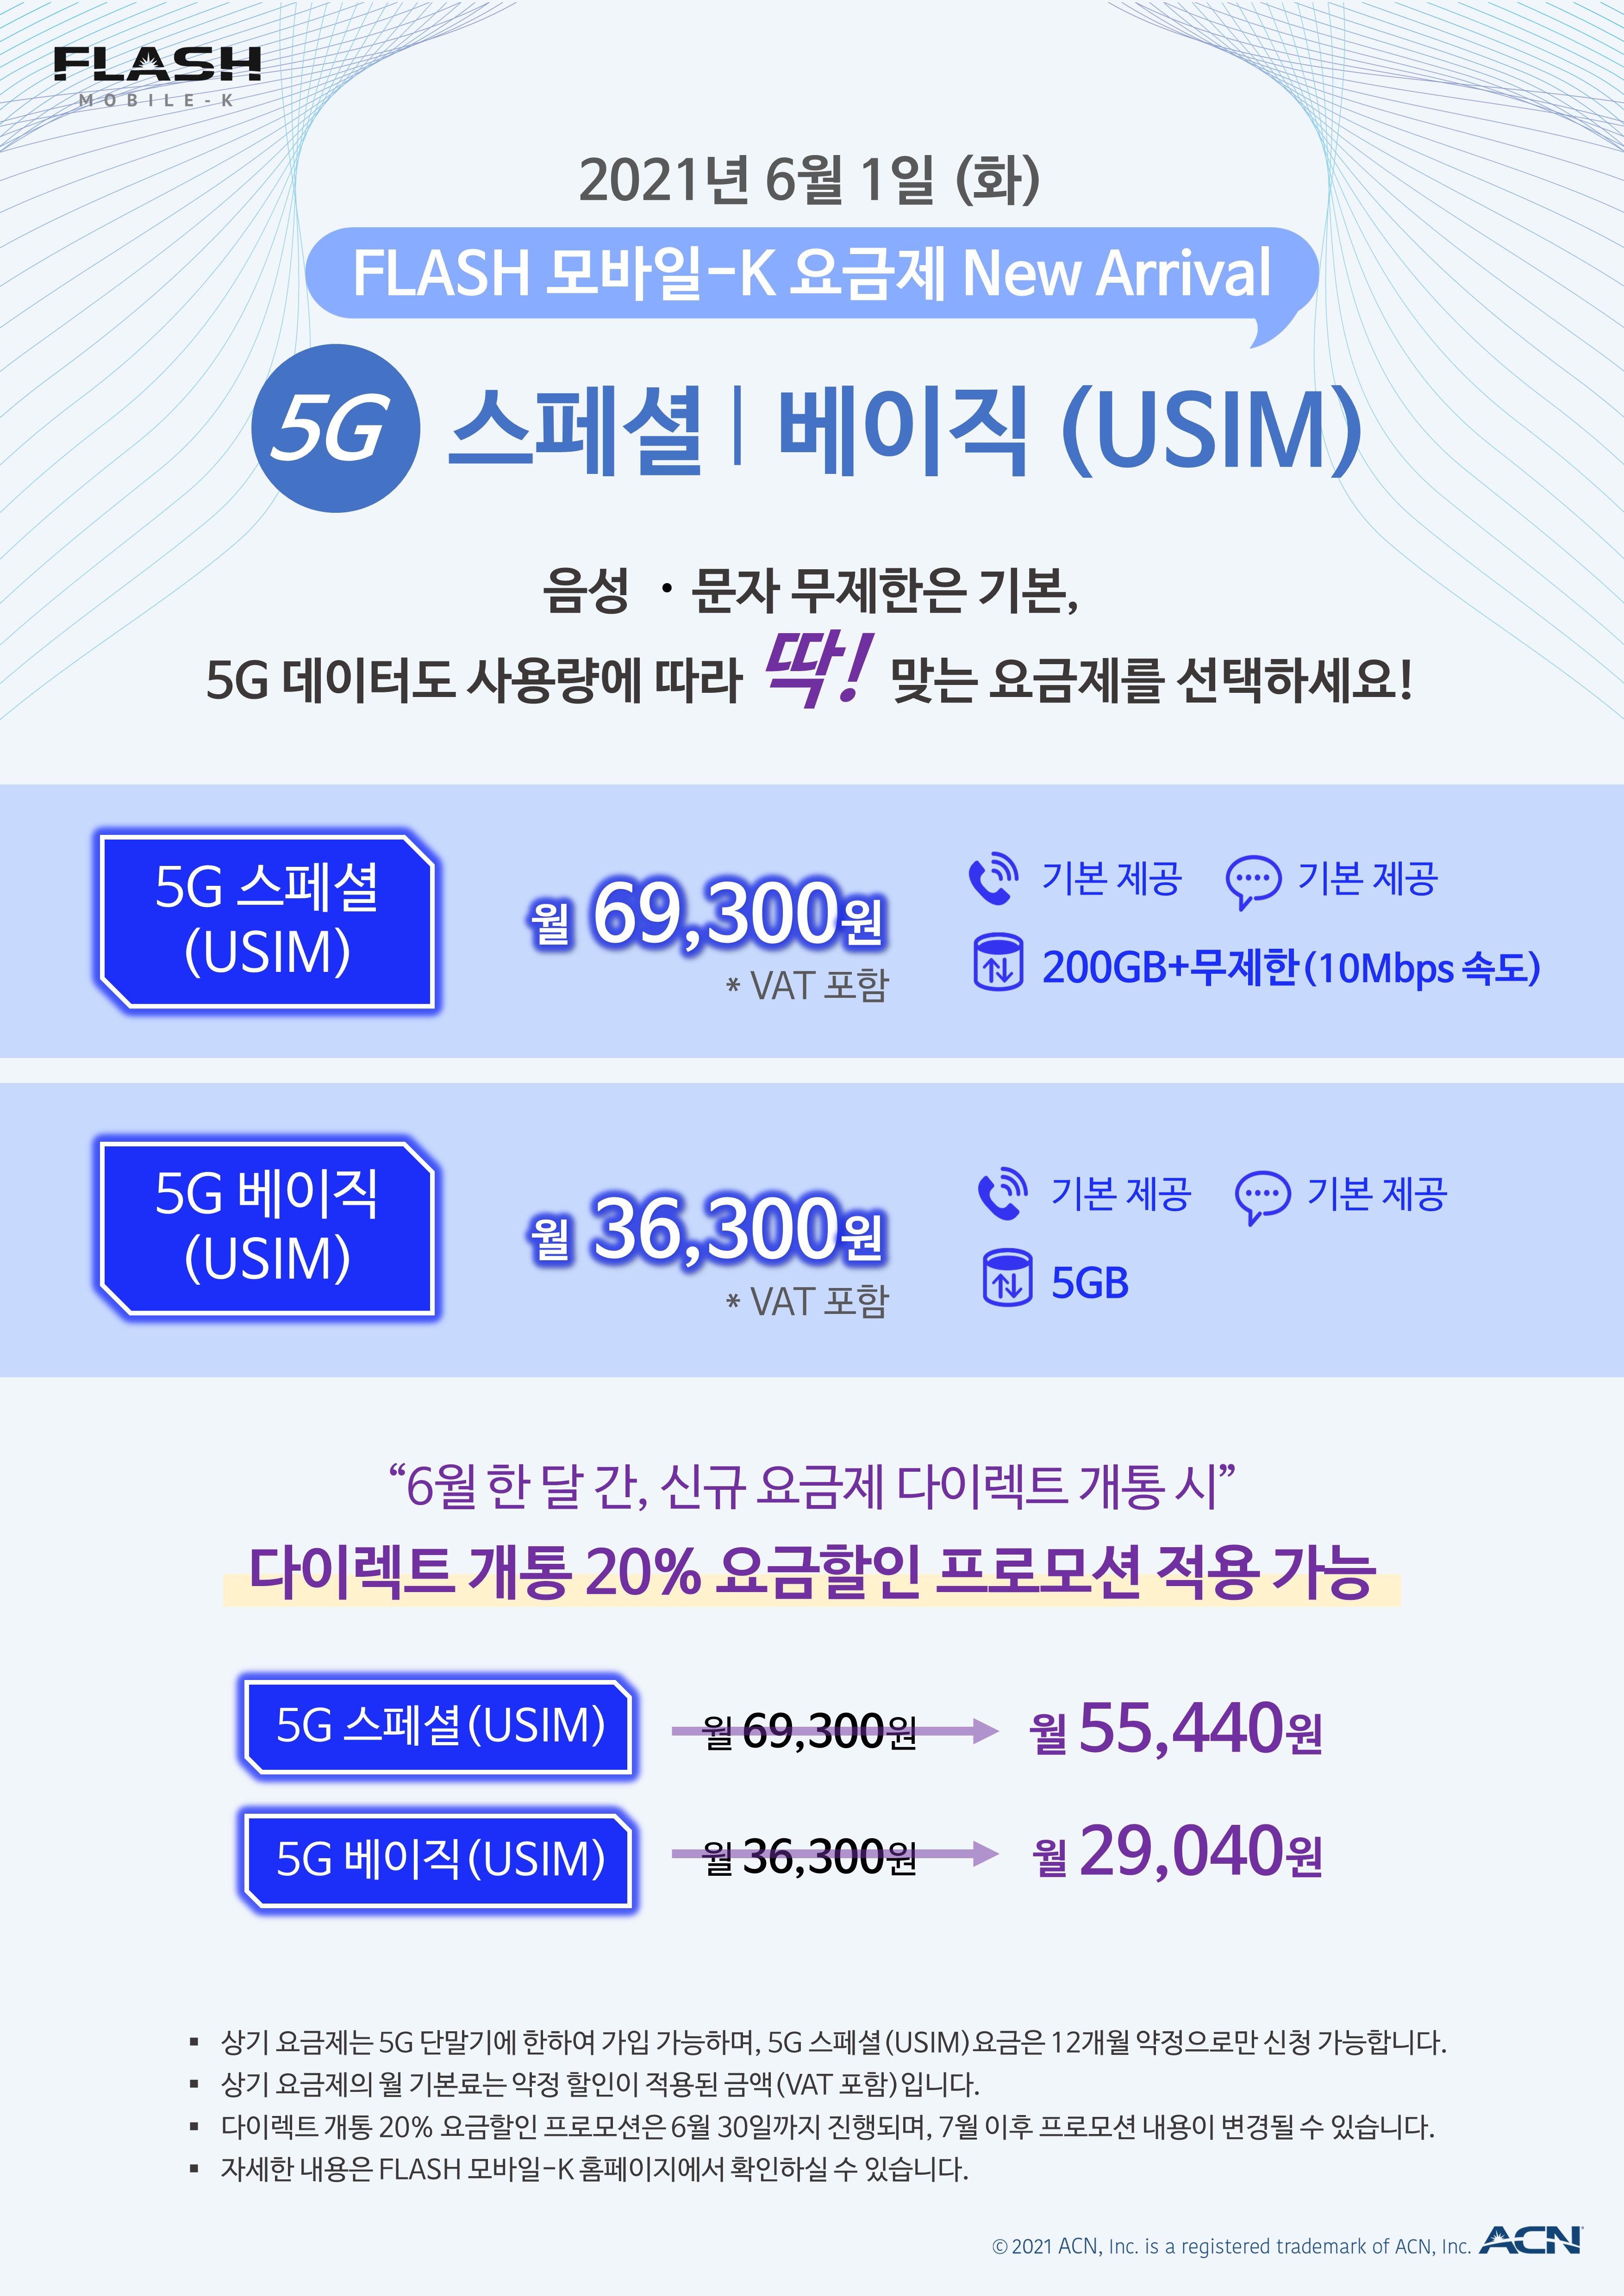 FLASH 모바일-K, 5G USIM 신규 요금제 출시